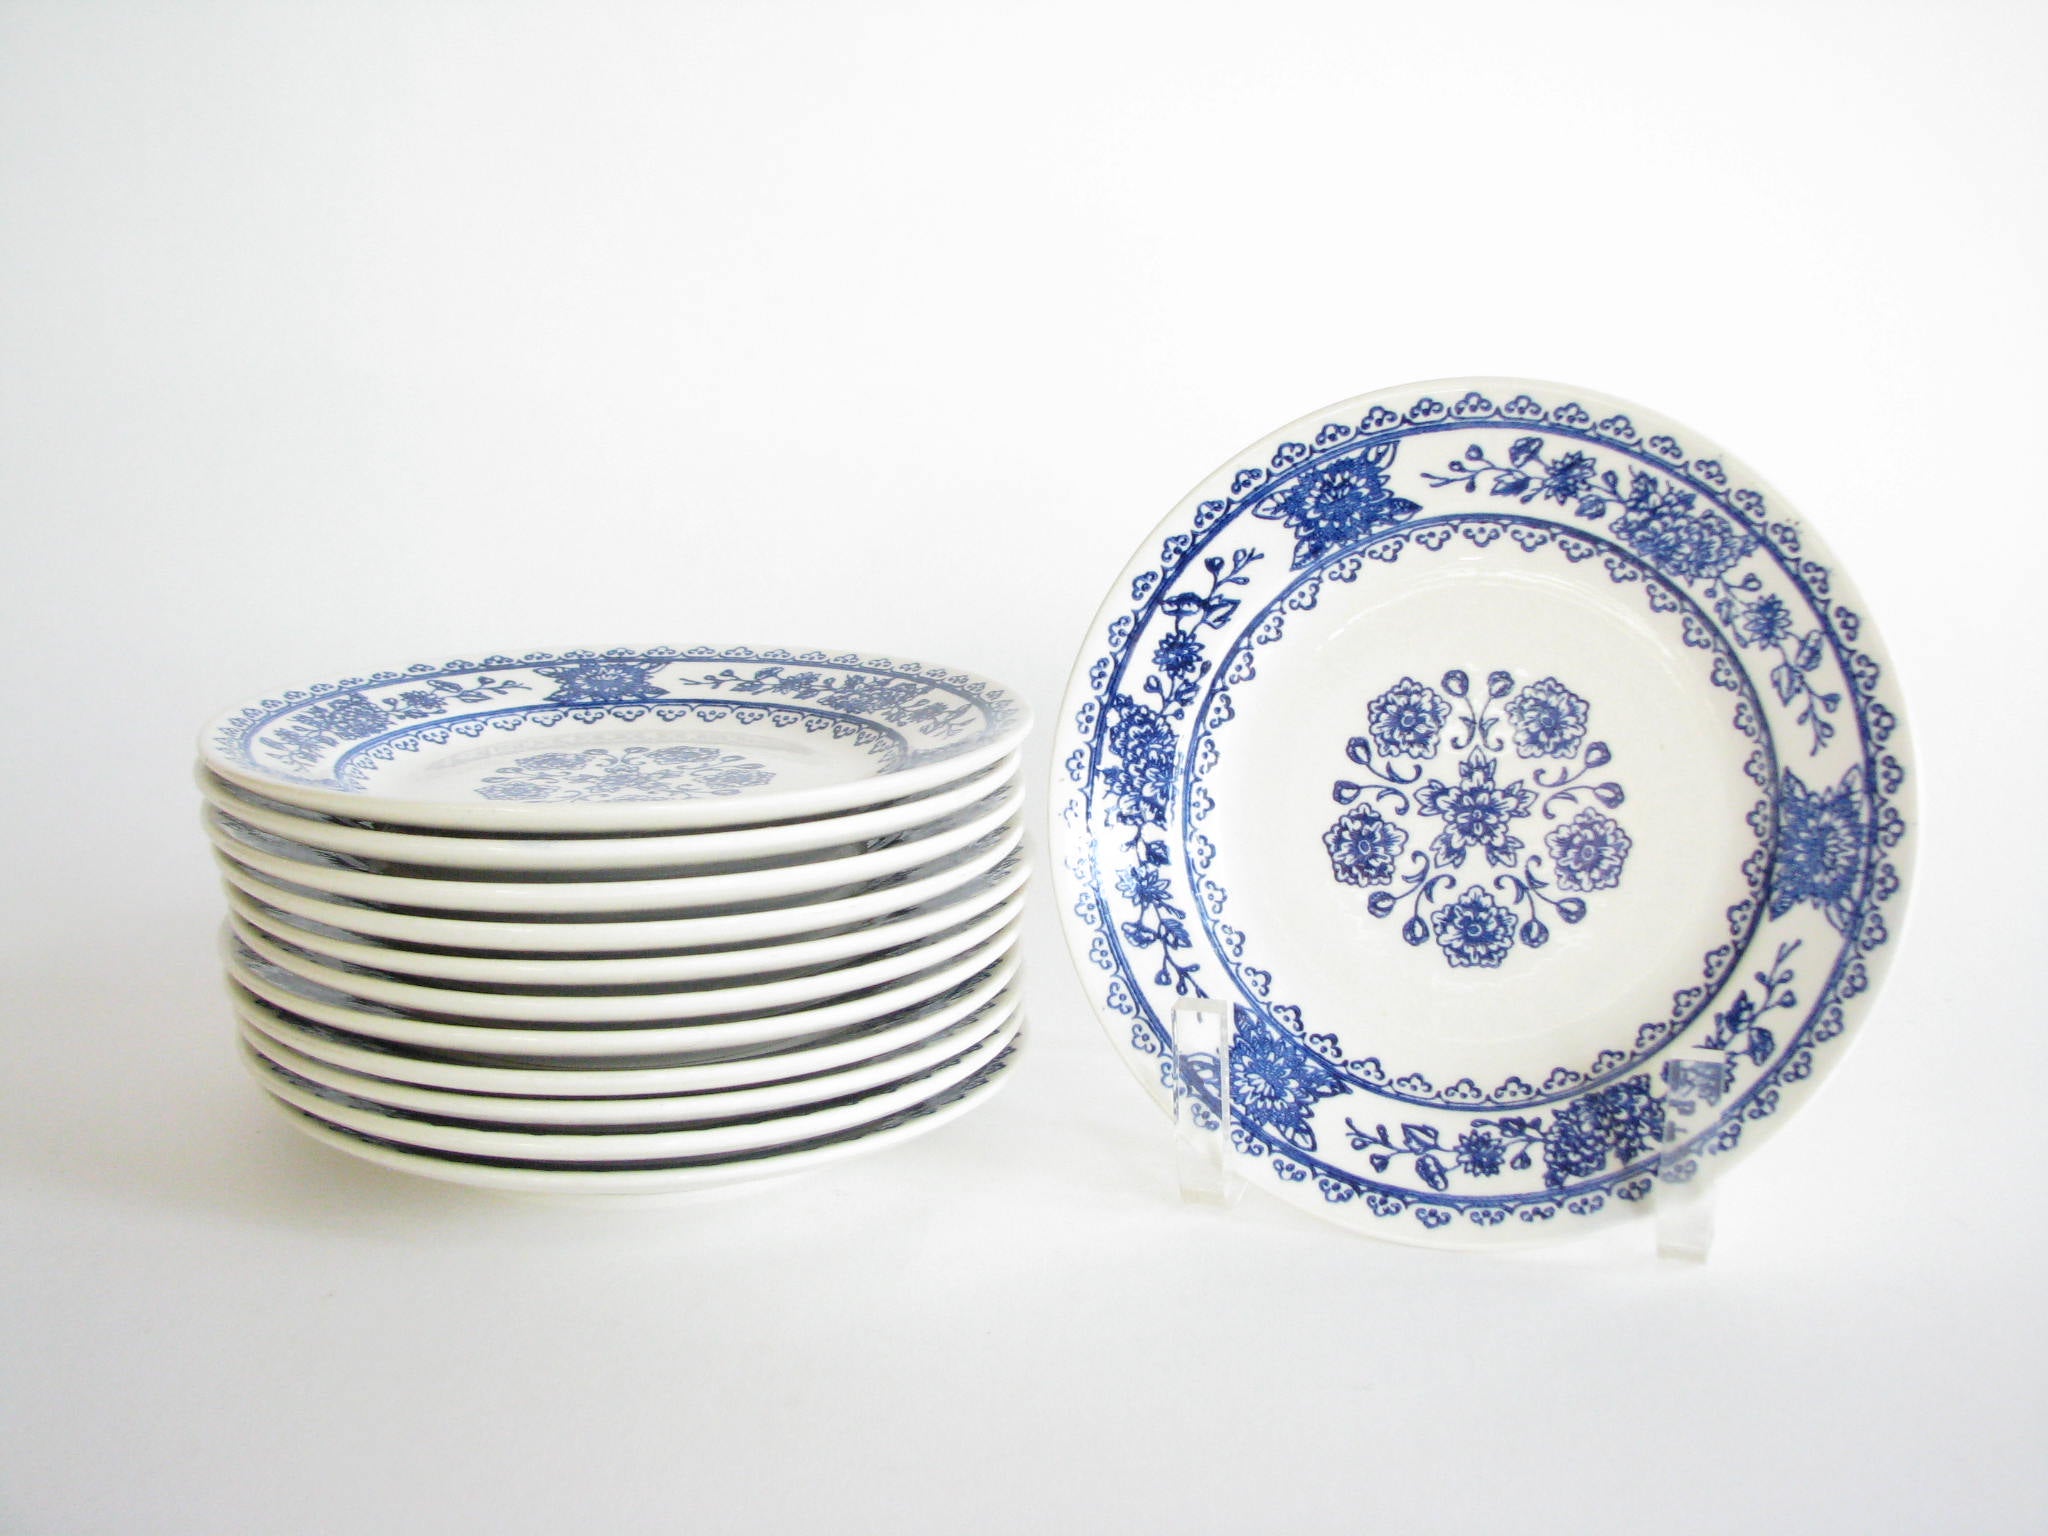 edgebrookhouse - Vintage Royal USA Ironstone Hampshire Blue and White Mum Bread or Dessert Plates - Set of 12